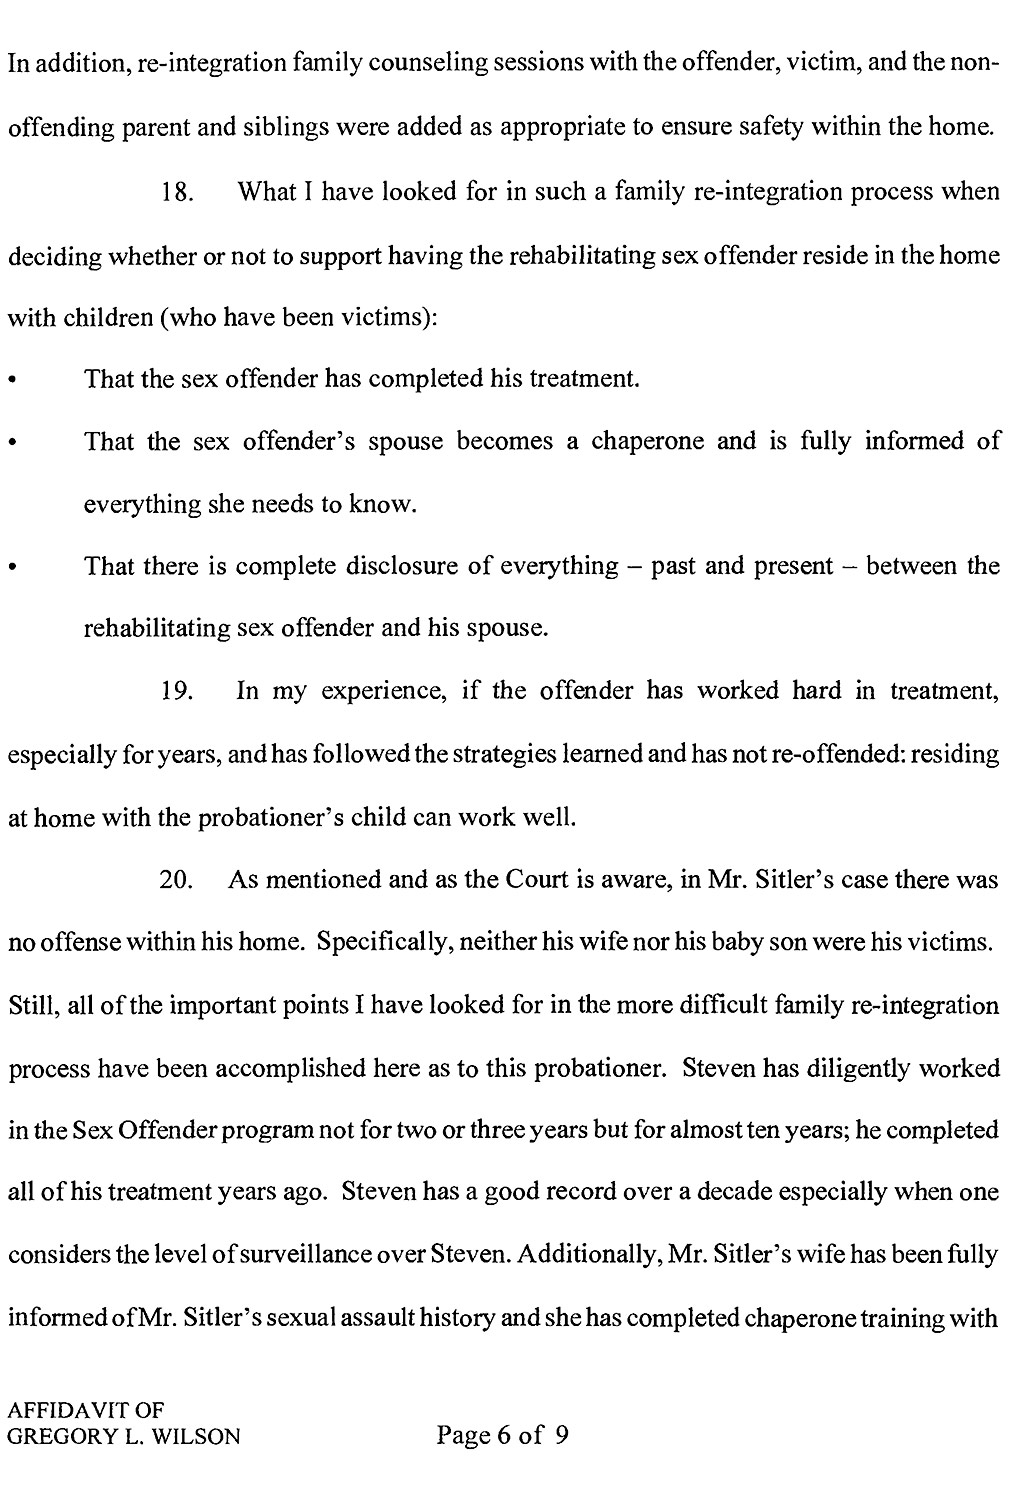 Affidavit of Gregory L. Wilson page 6